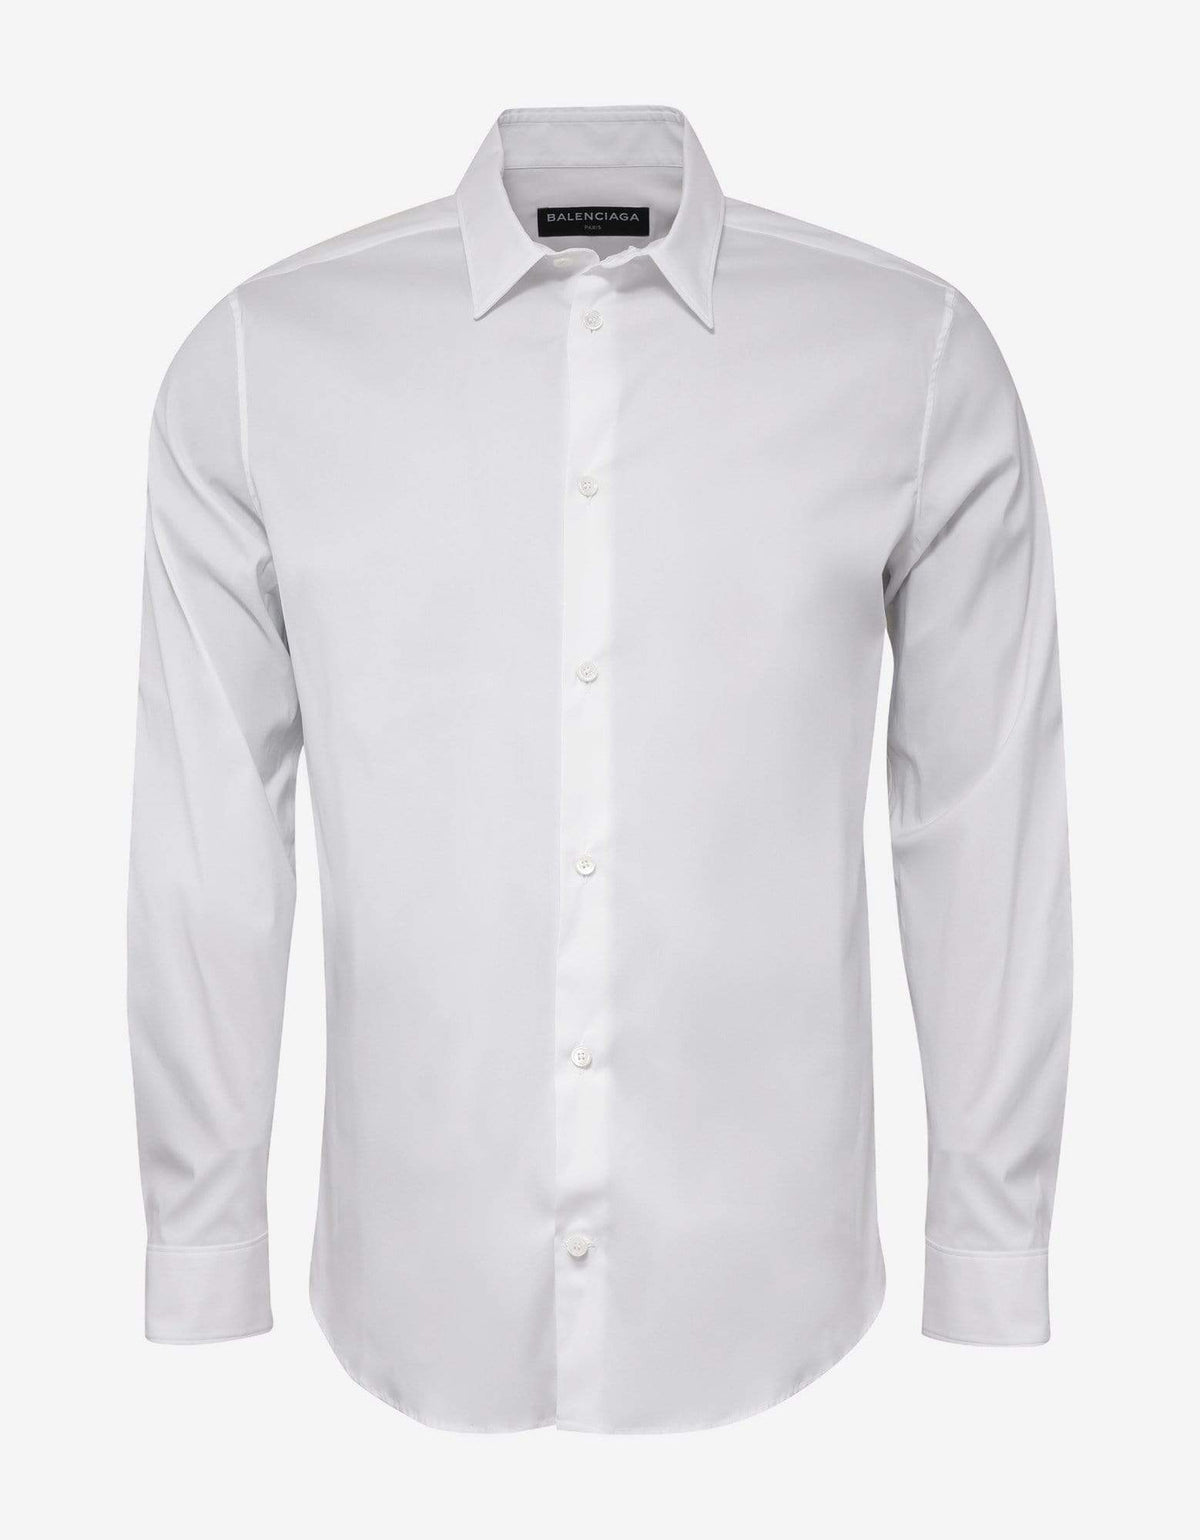 Balenciaga White Slim Fit Shirt